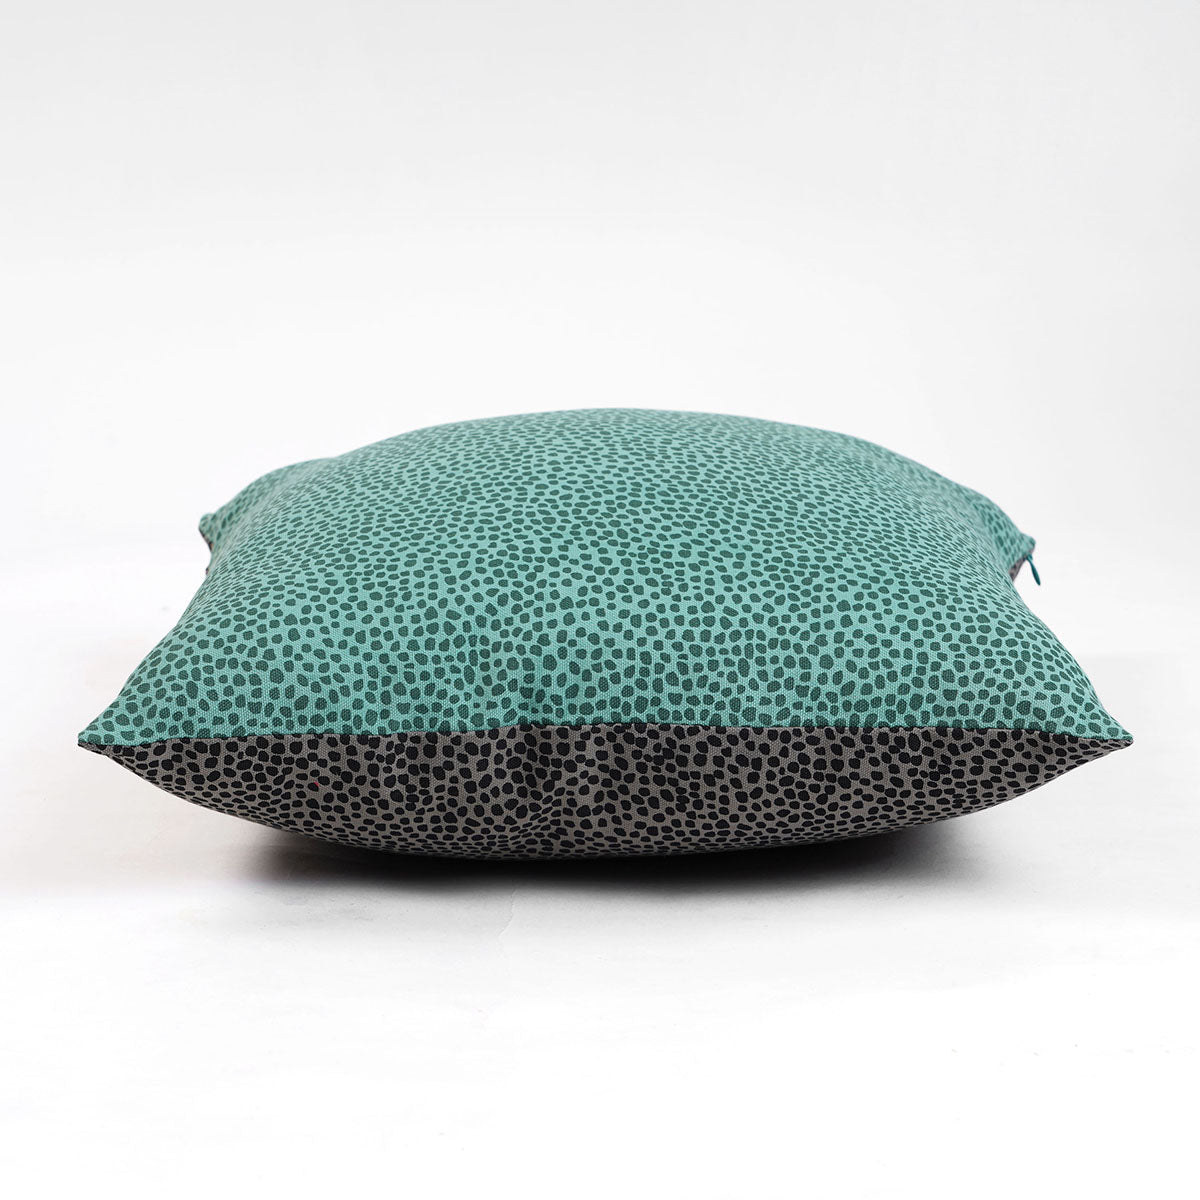 MODERN RETRO - Aqua green &amp; charcoal grey reversible throw pillow cover, dot print, cotton pillow, sizes available.